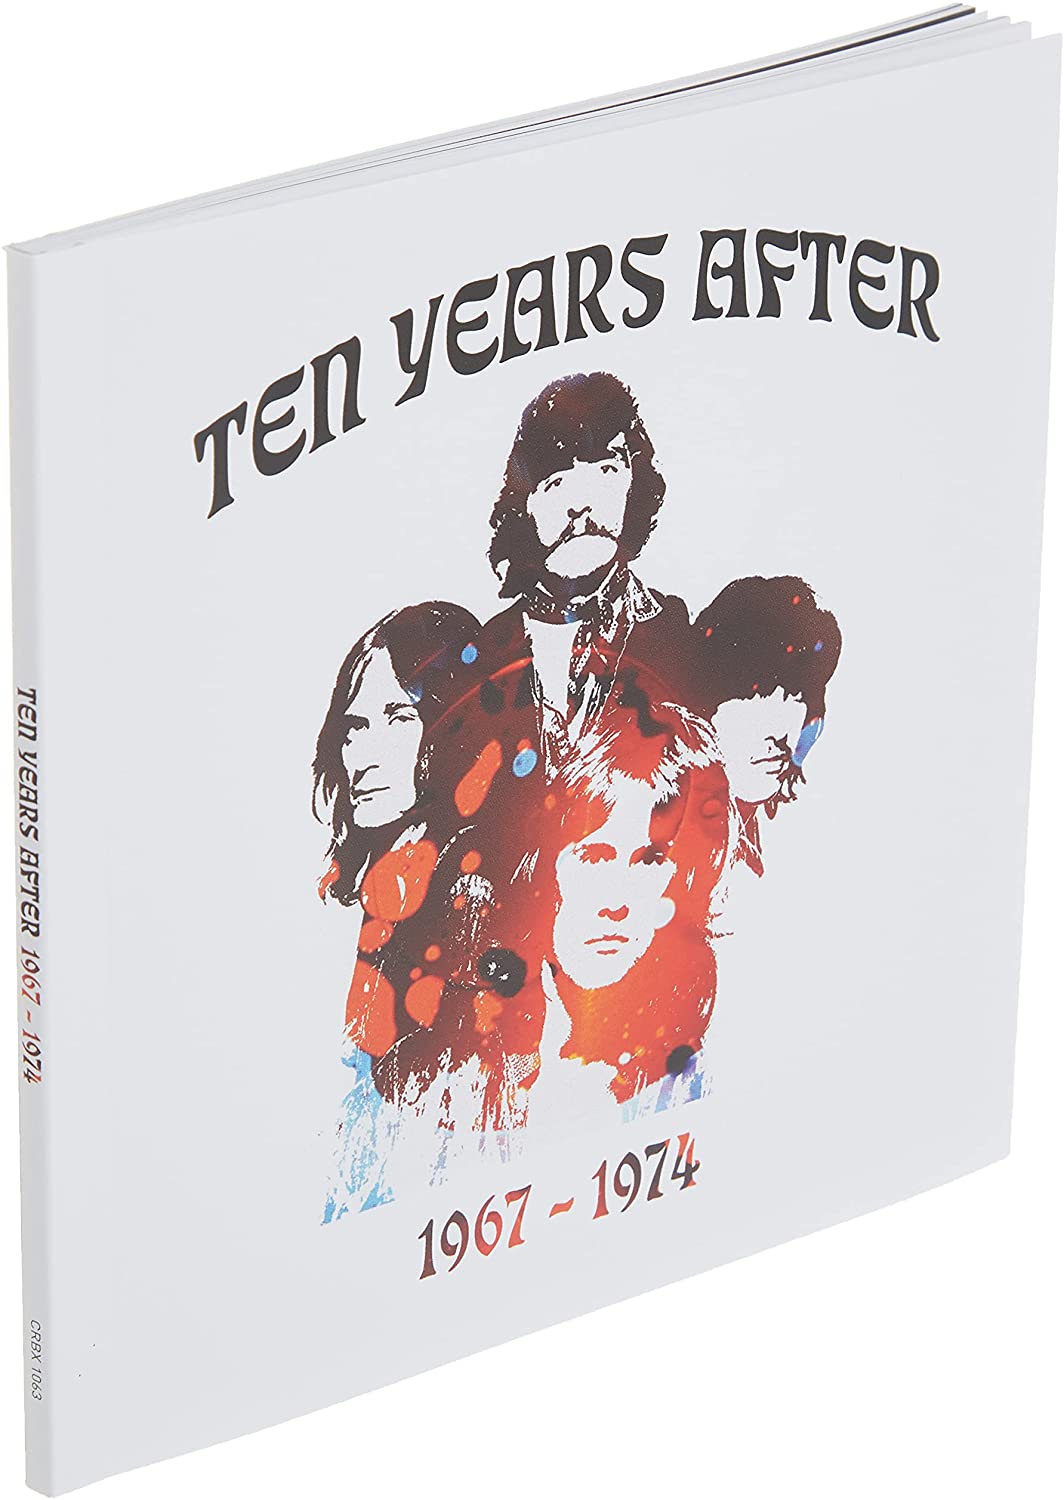 Ten Years After - 1967-1974 [Audio CD]